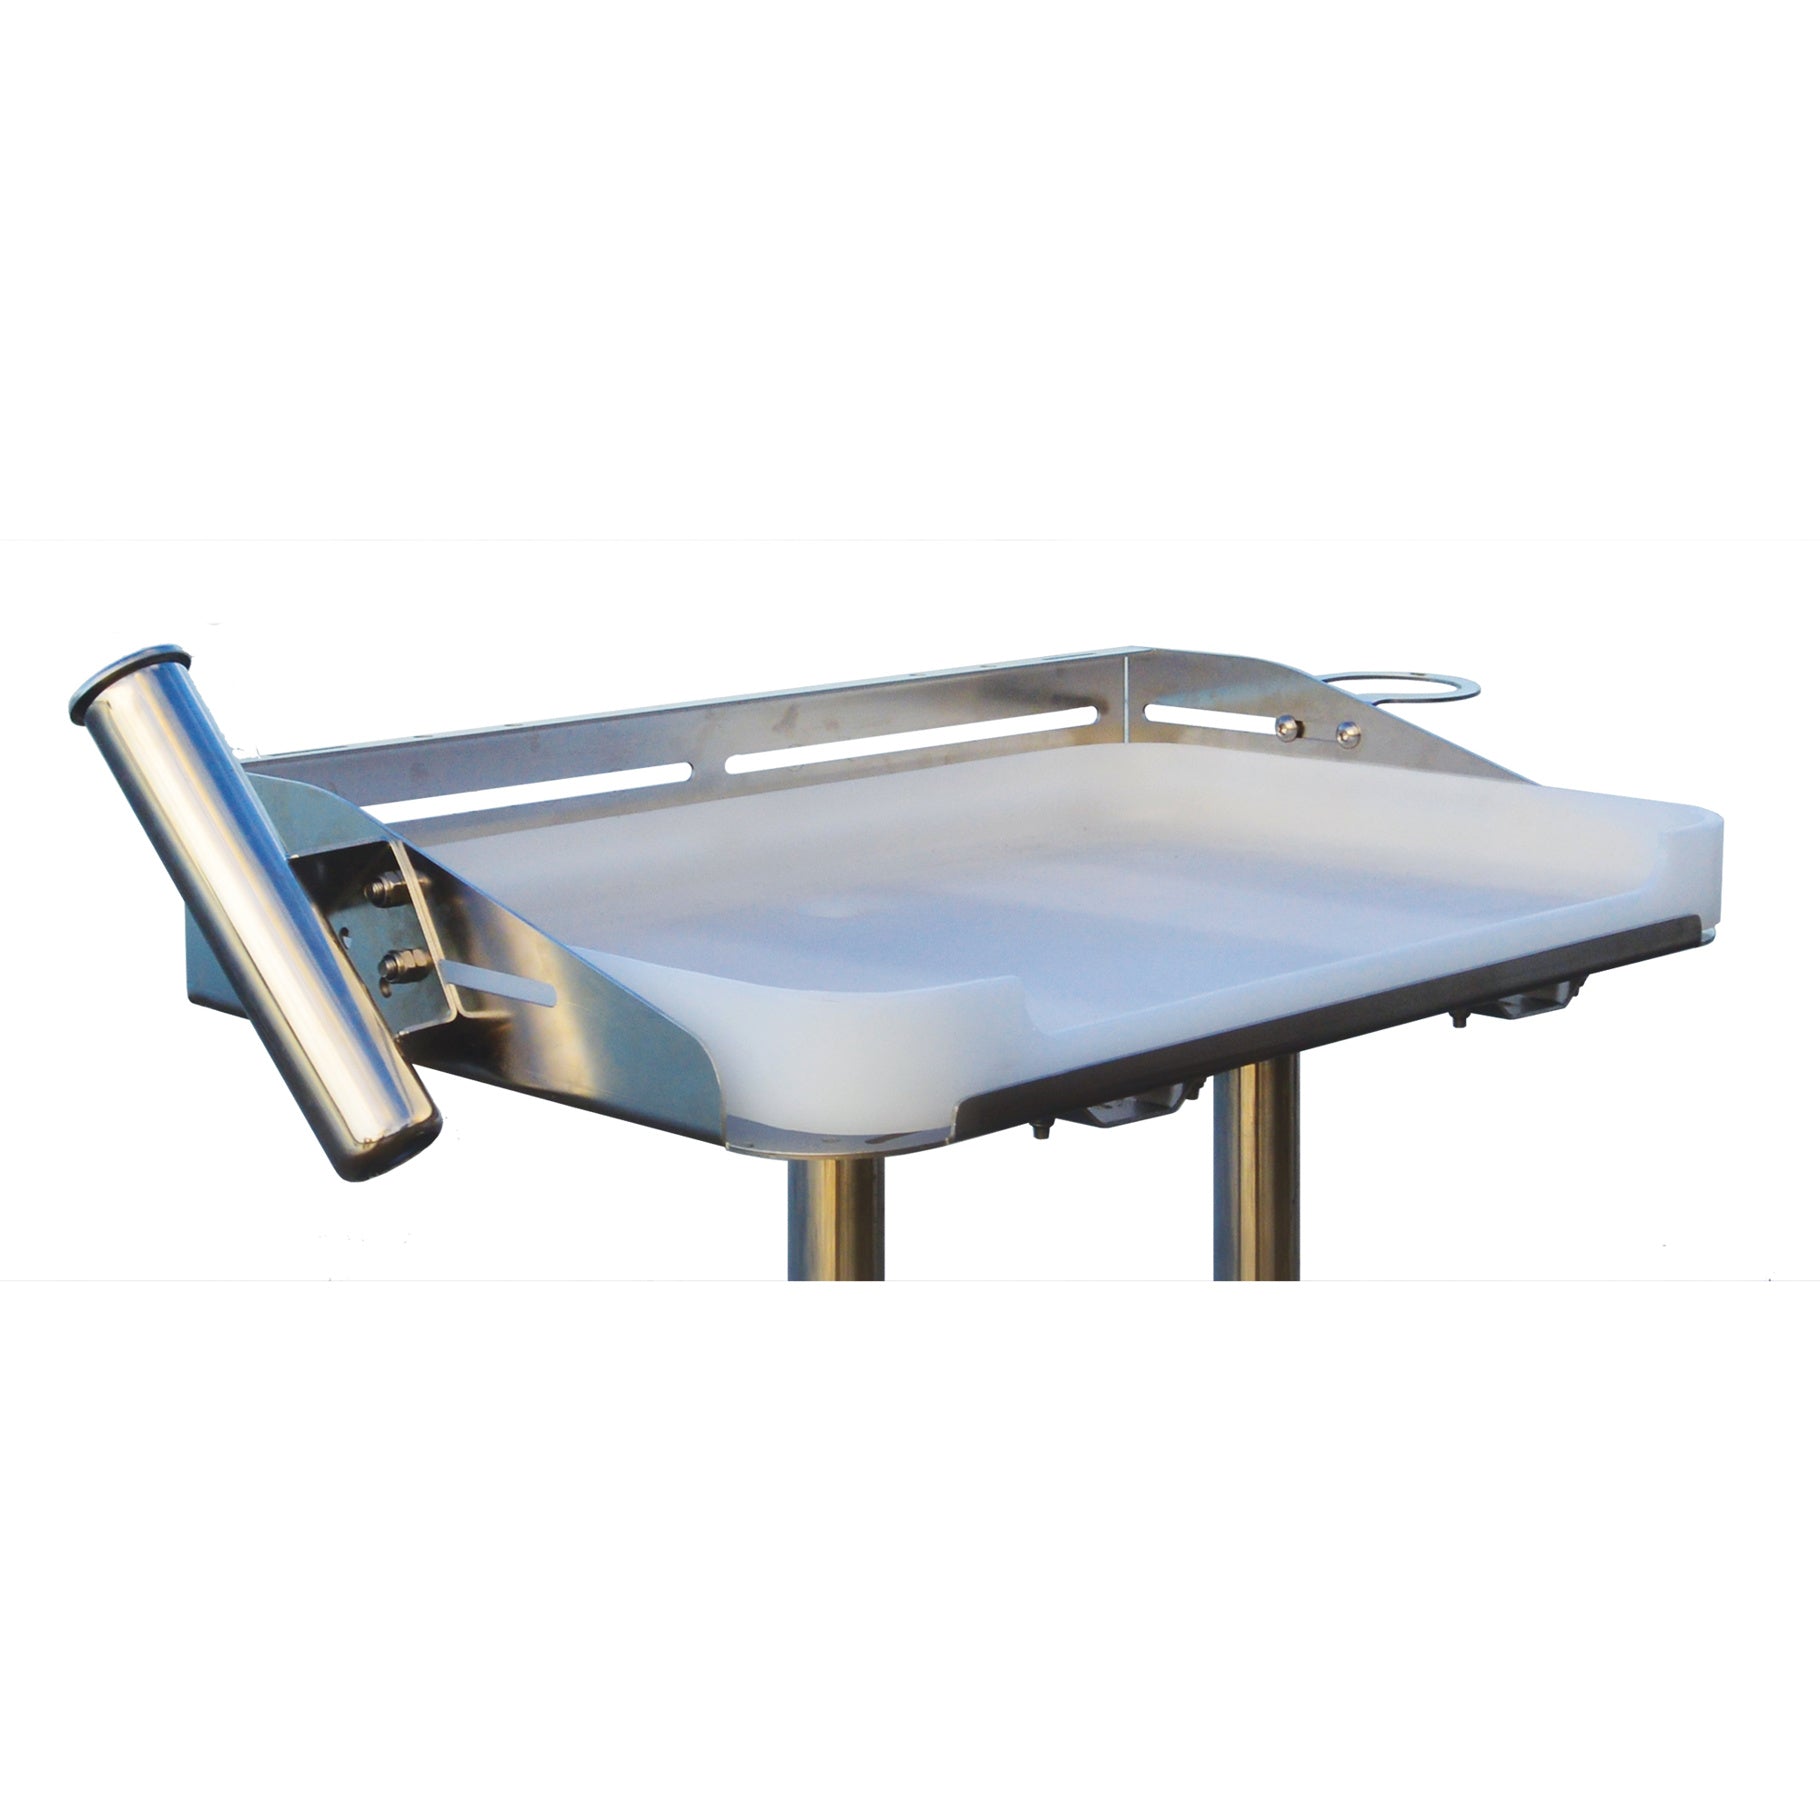 Modular Boat Table/Bait Station